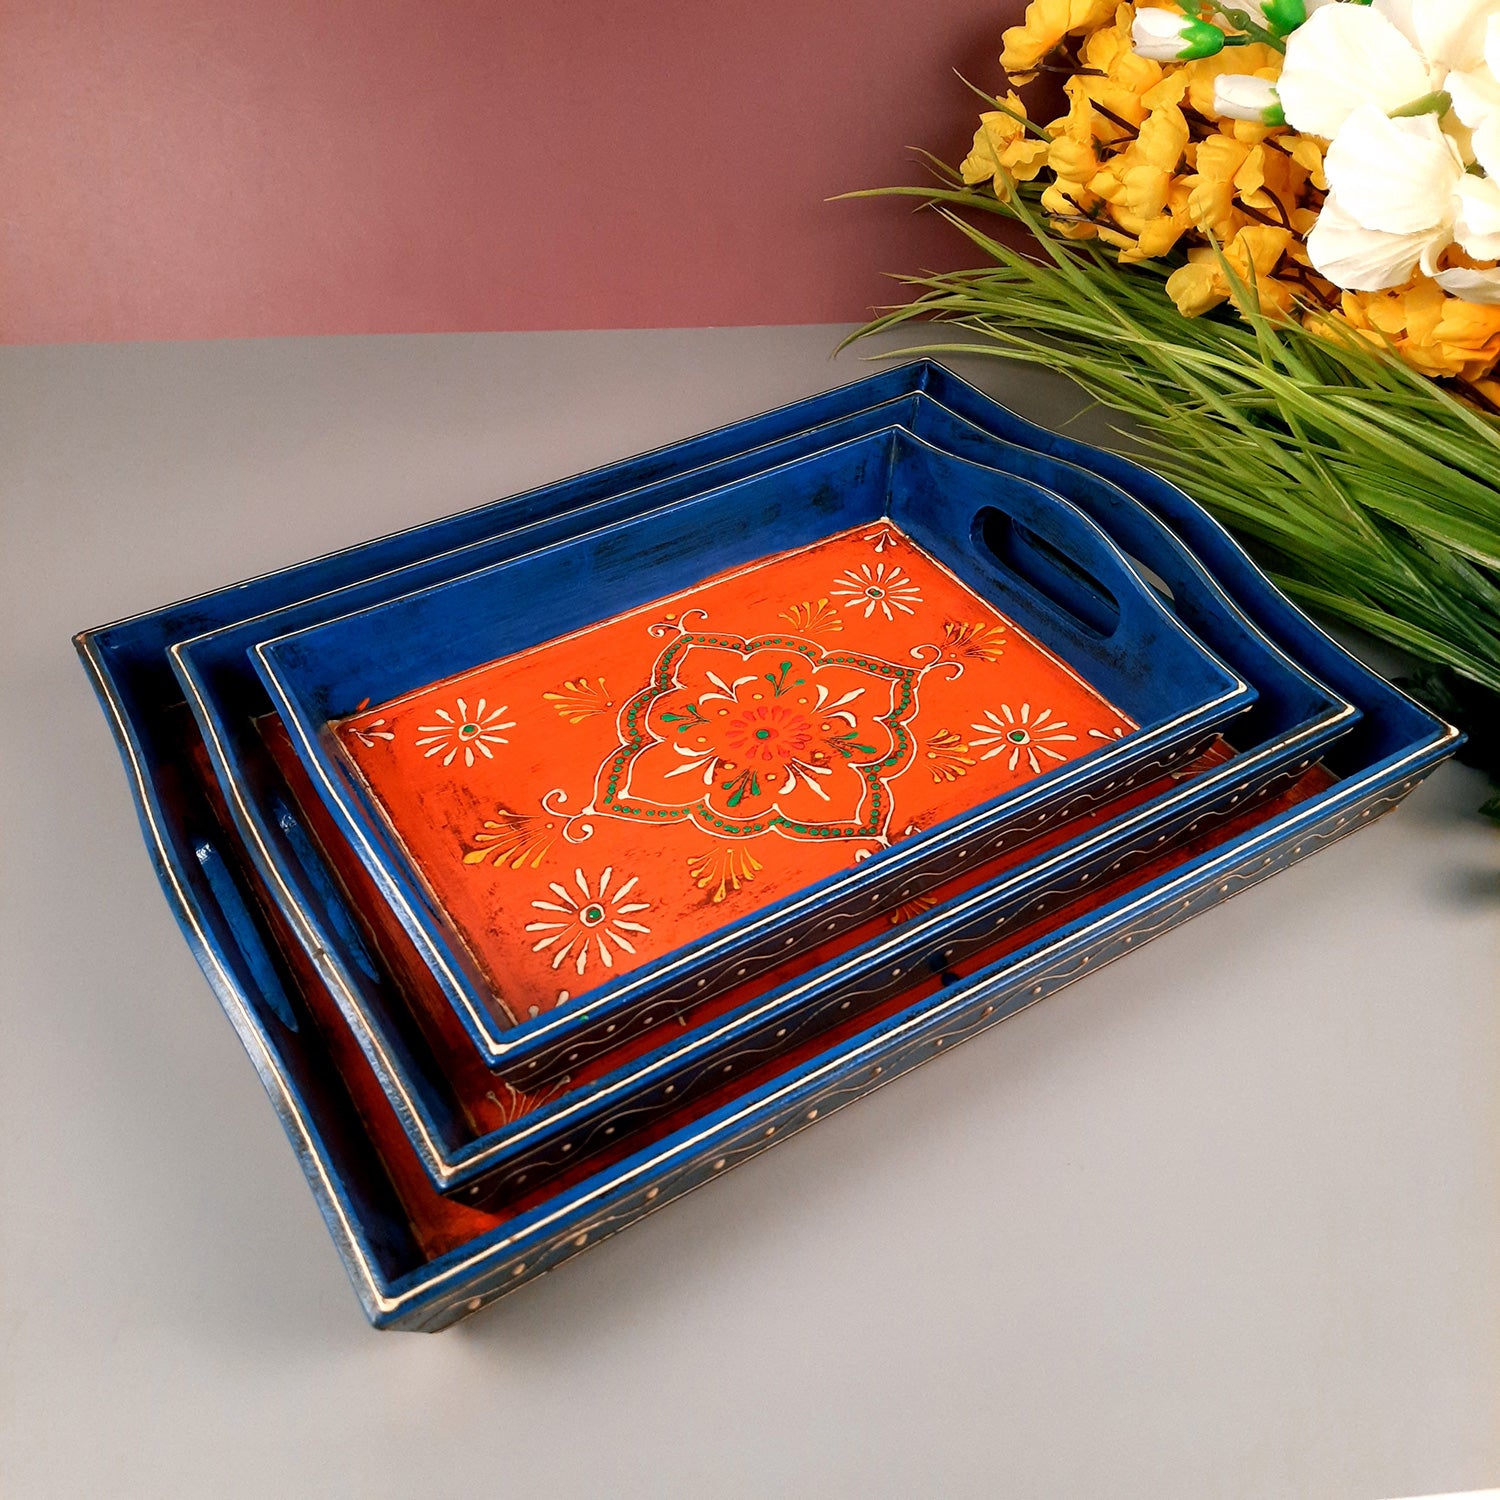 Serving Tray Set | Wooden Tea Tray | Serving Platter - For Home, Dining Table, Kitchen & Gift (Set of 3) - Apkamart